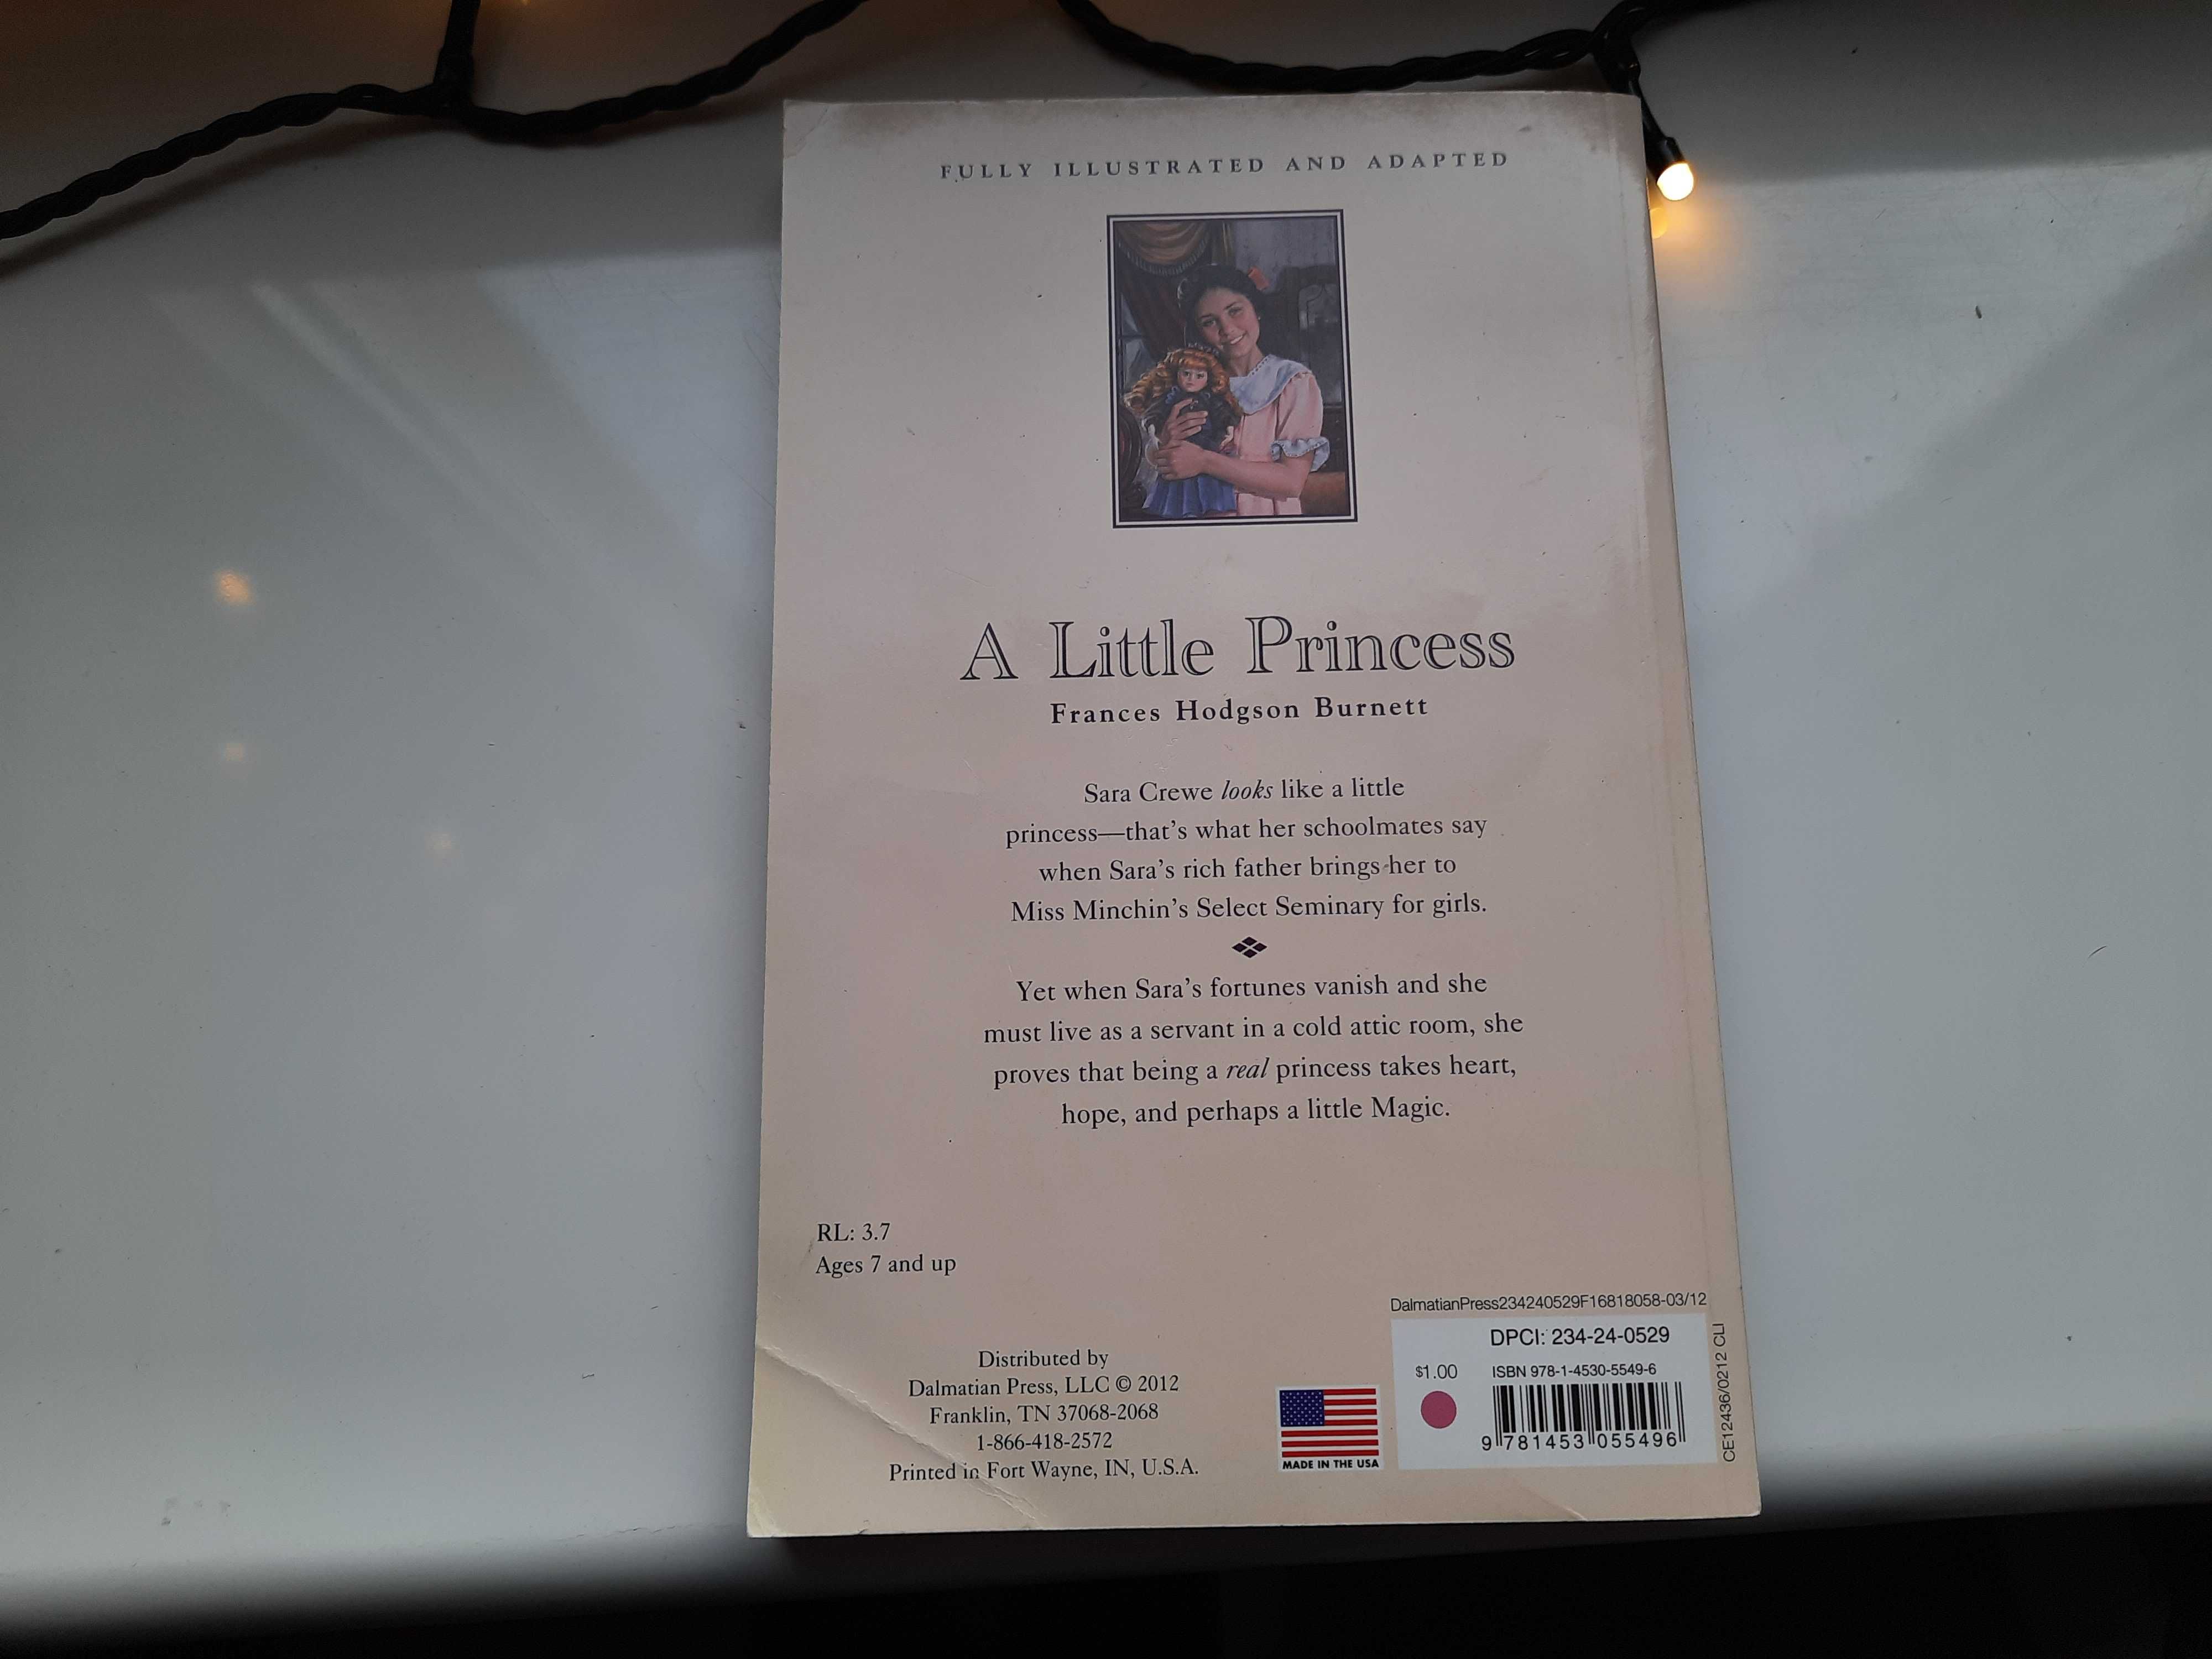 "A Little Princess" F.H. Burnett po angielsku